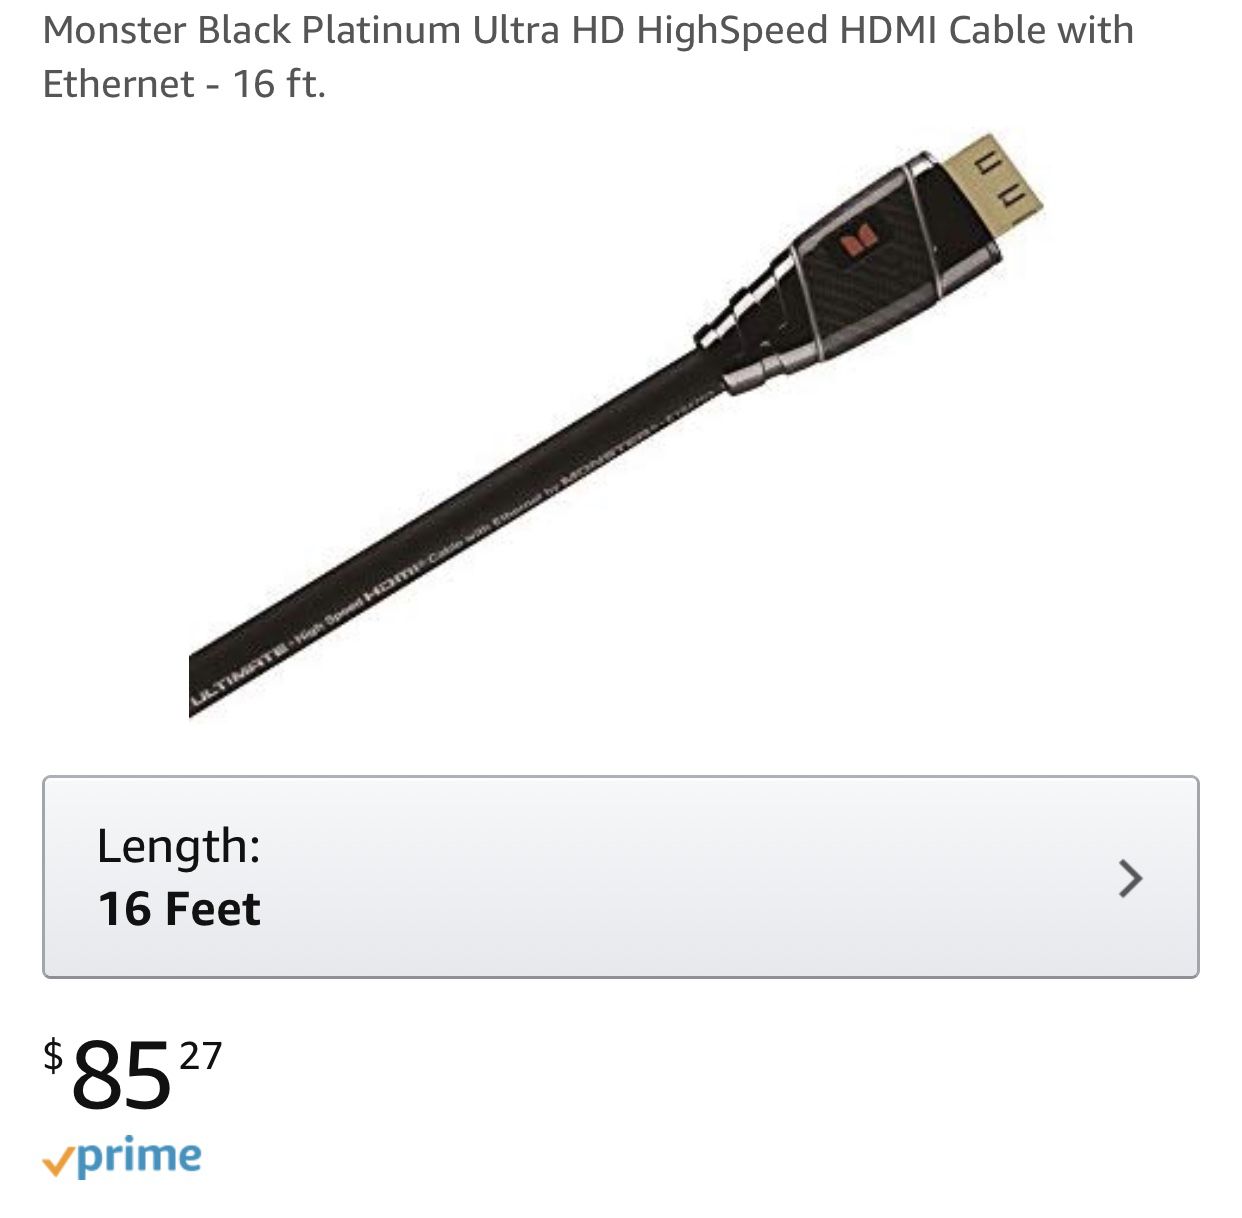 Black Platinum HD Monster HDMI Cables